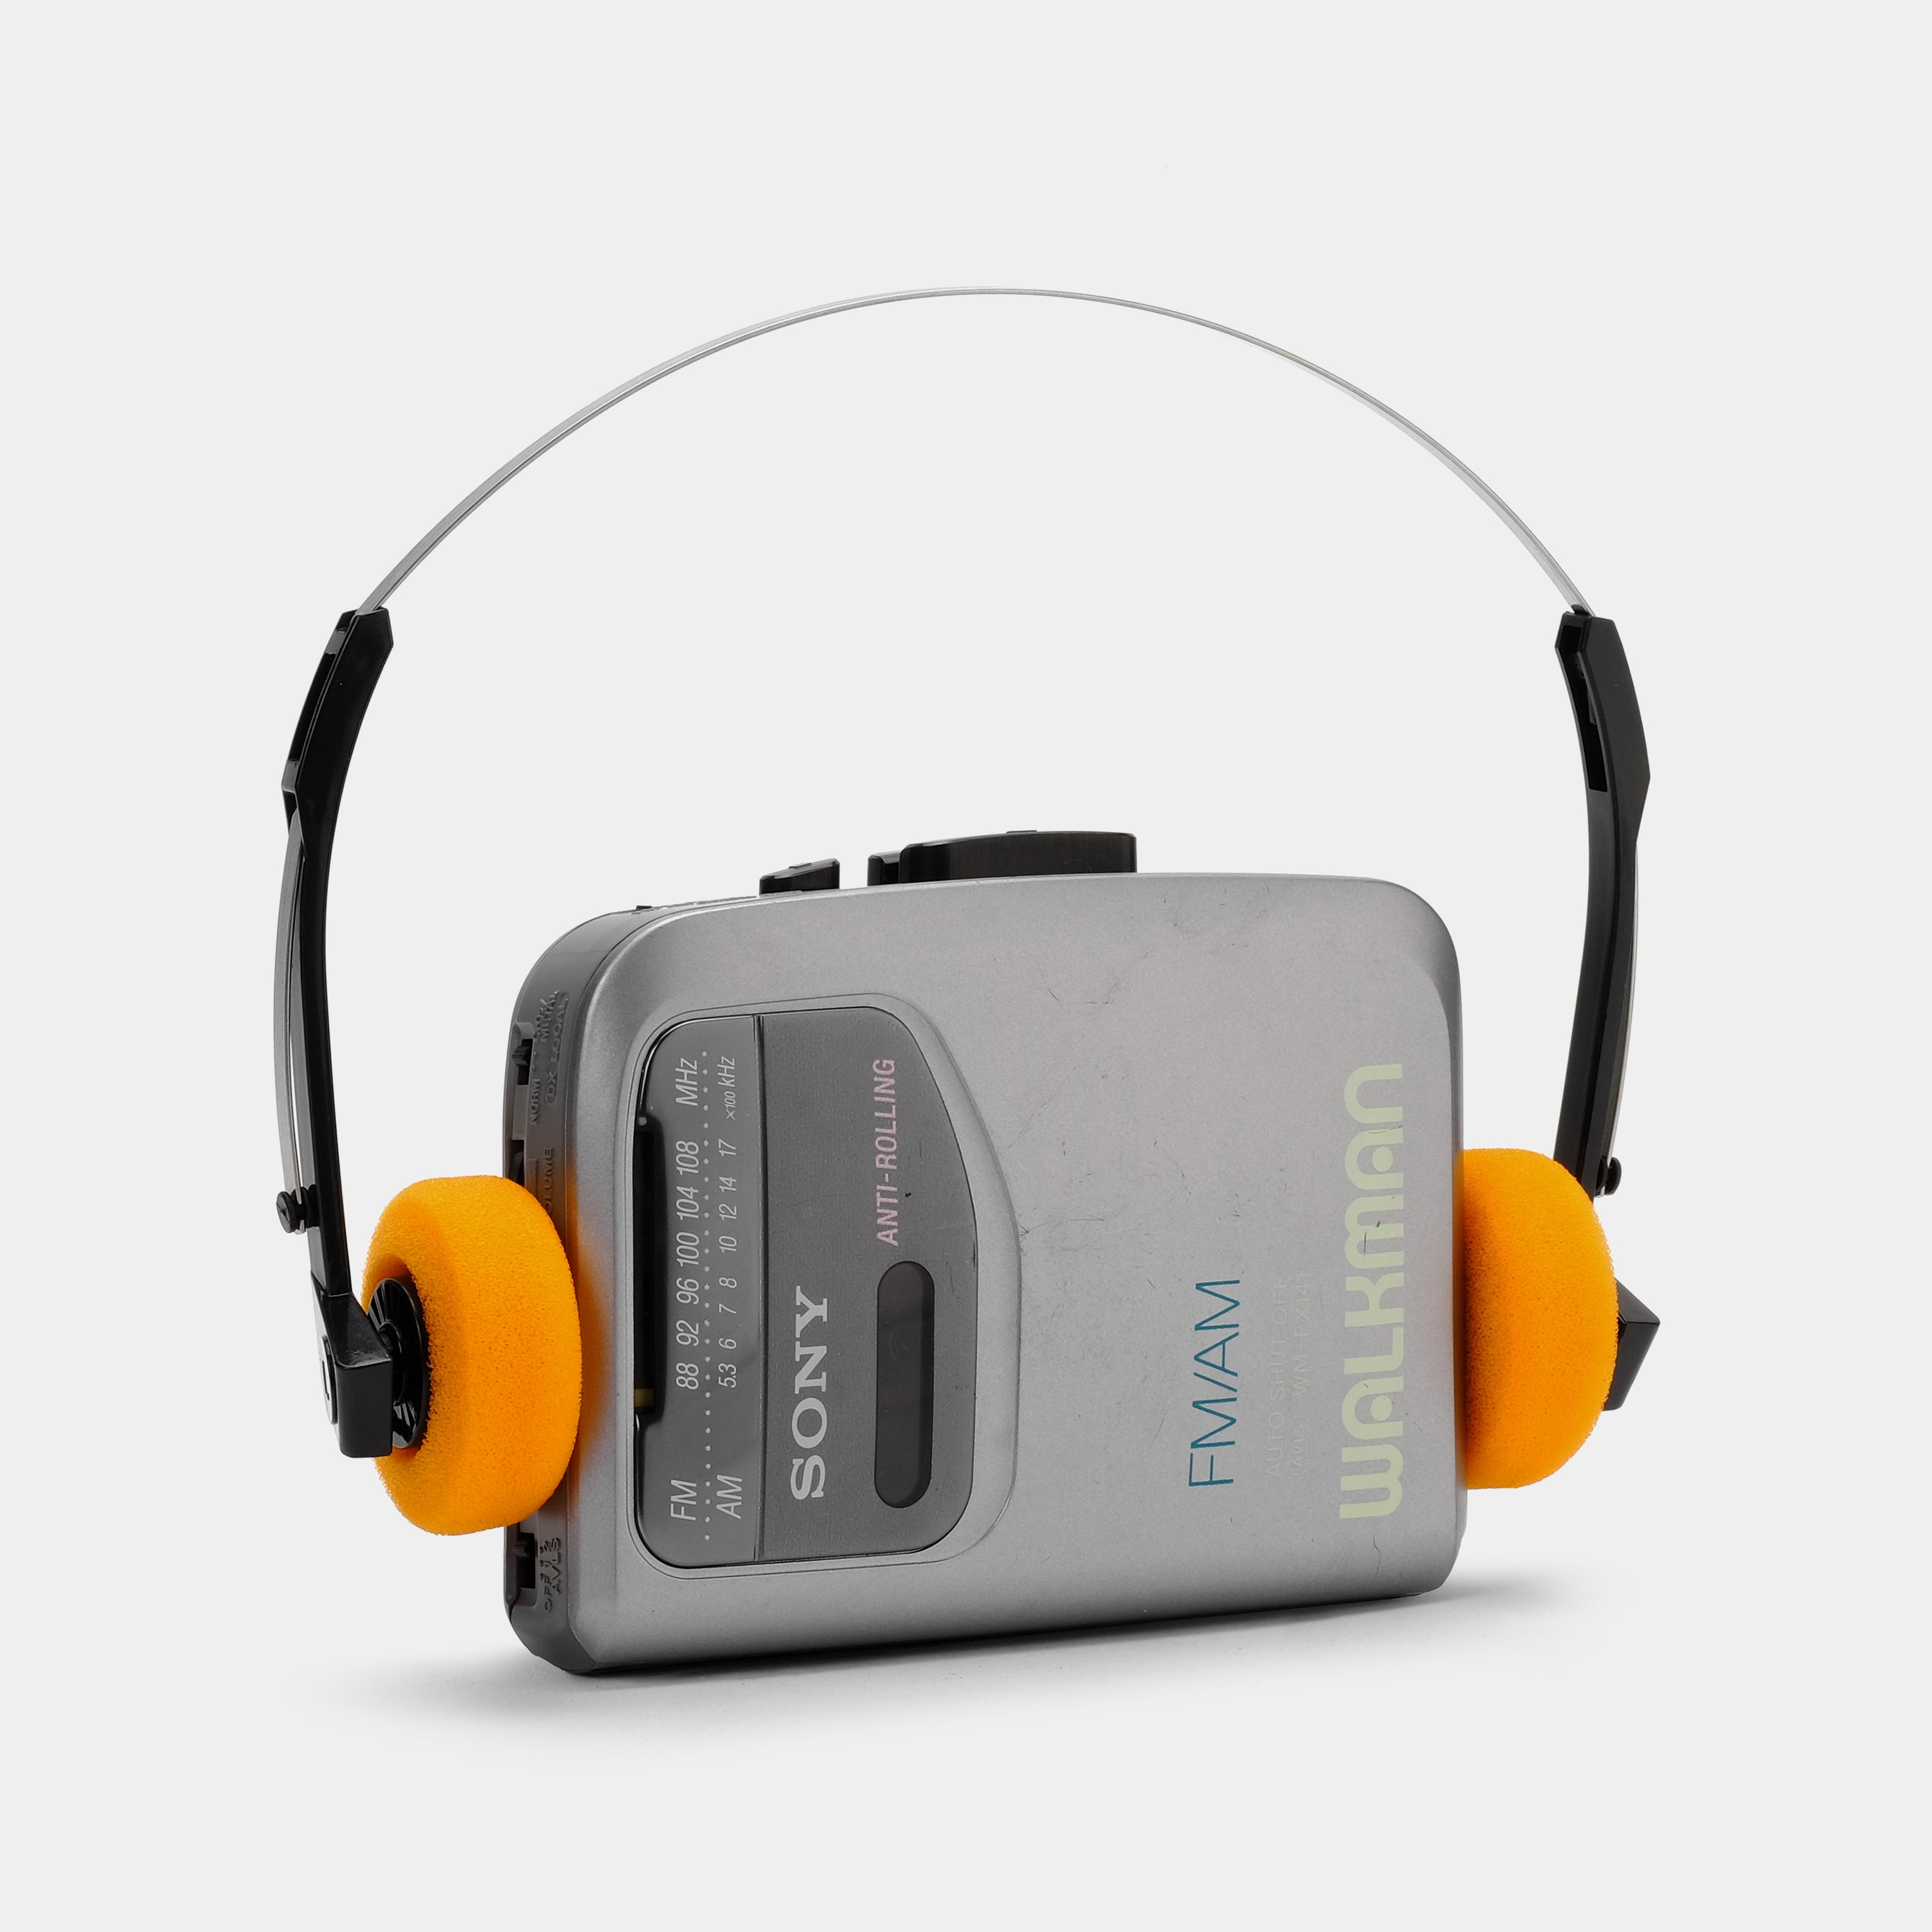 Sony Walkman WM-FX141 AM/FM Portable Cassette Player